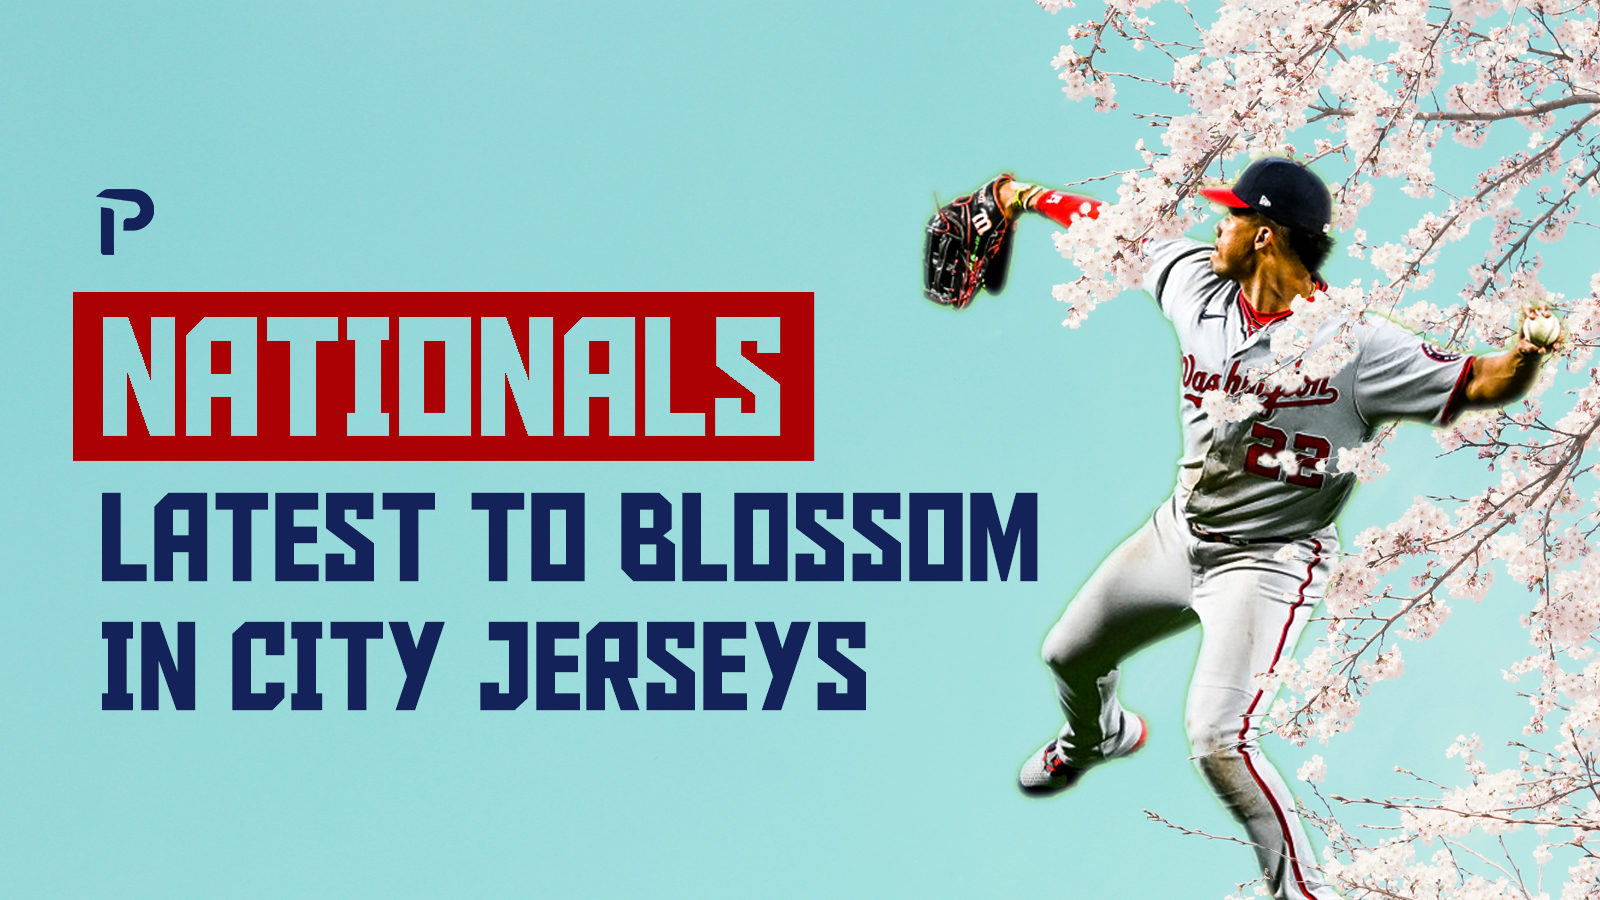 Washington Nationals and Wizards' Uniforms Get a Cherry Blossom